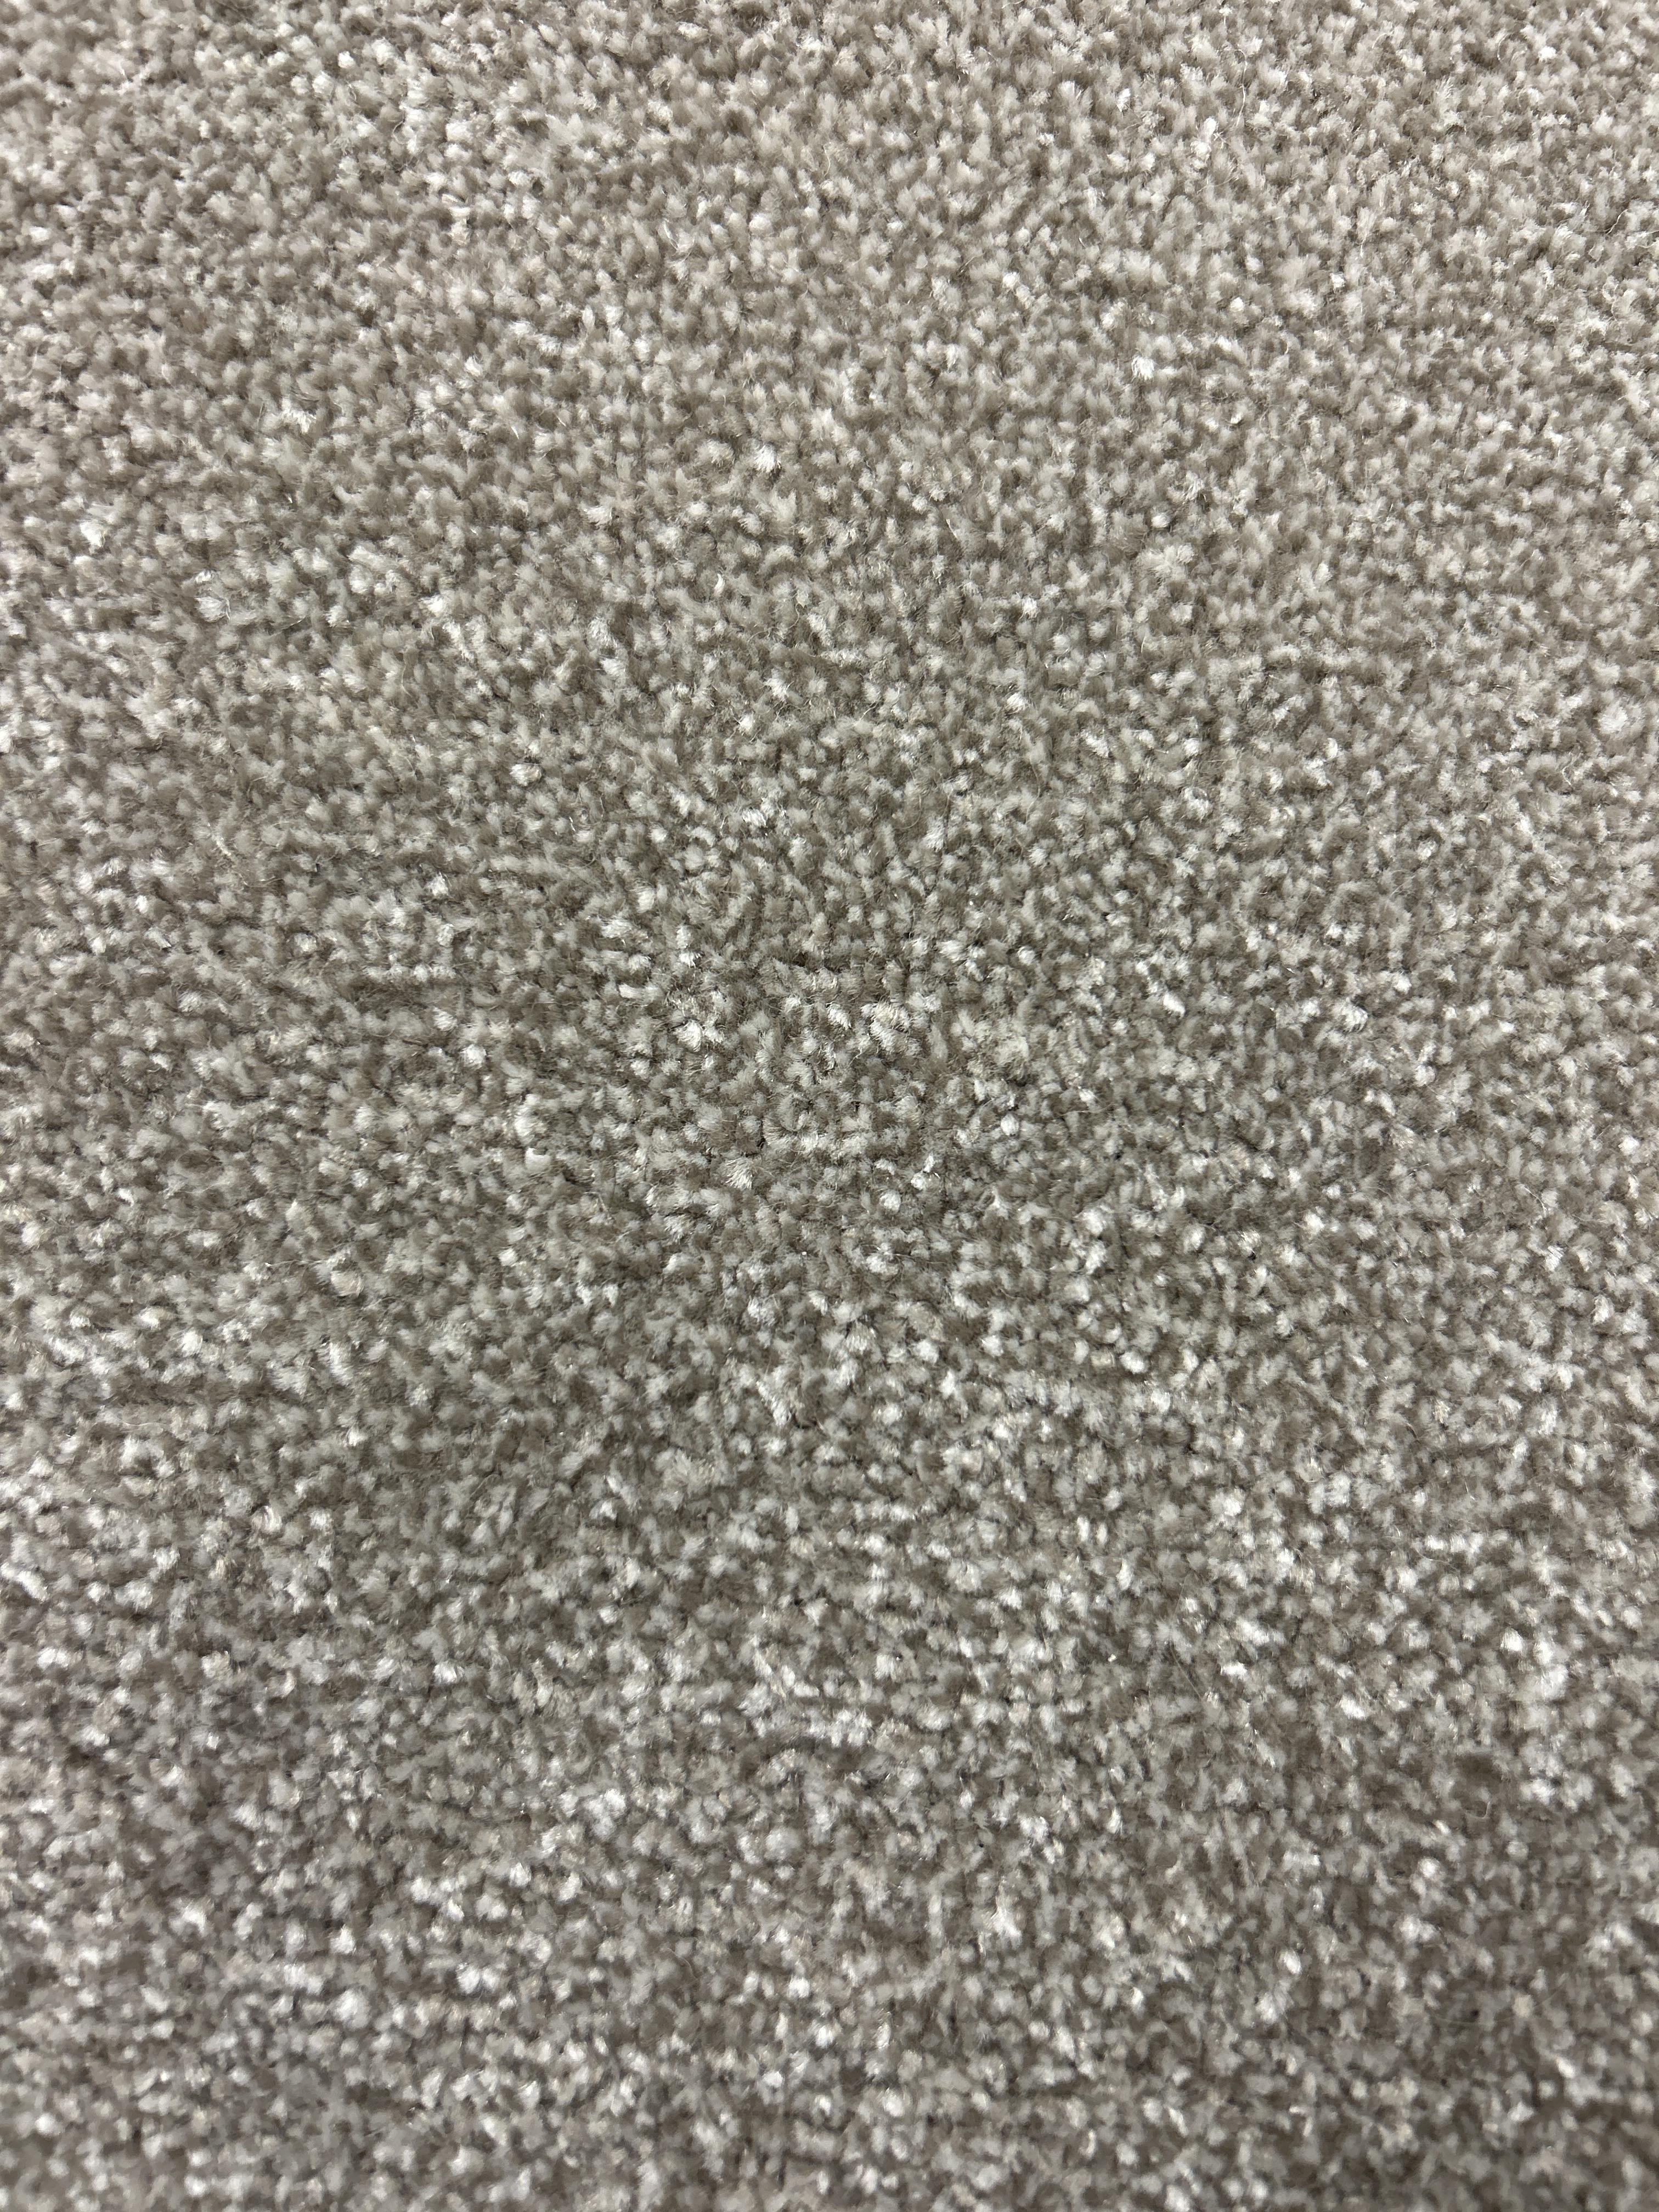 Beverley hills carpet